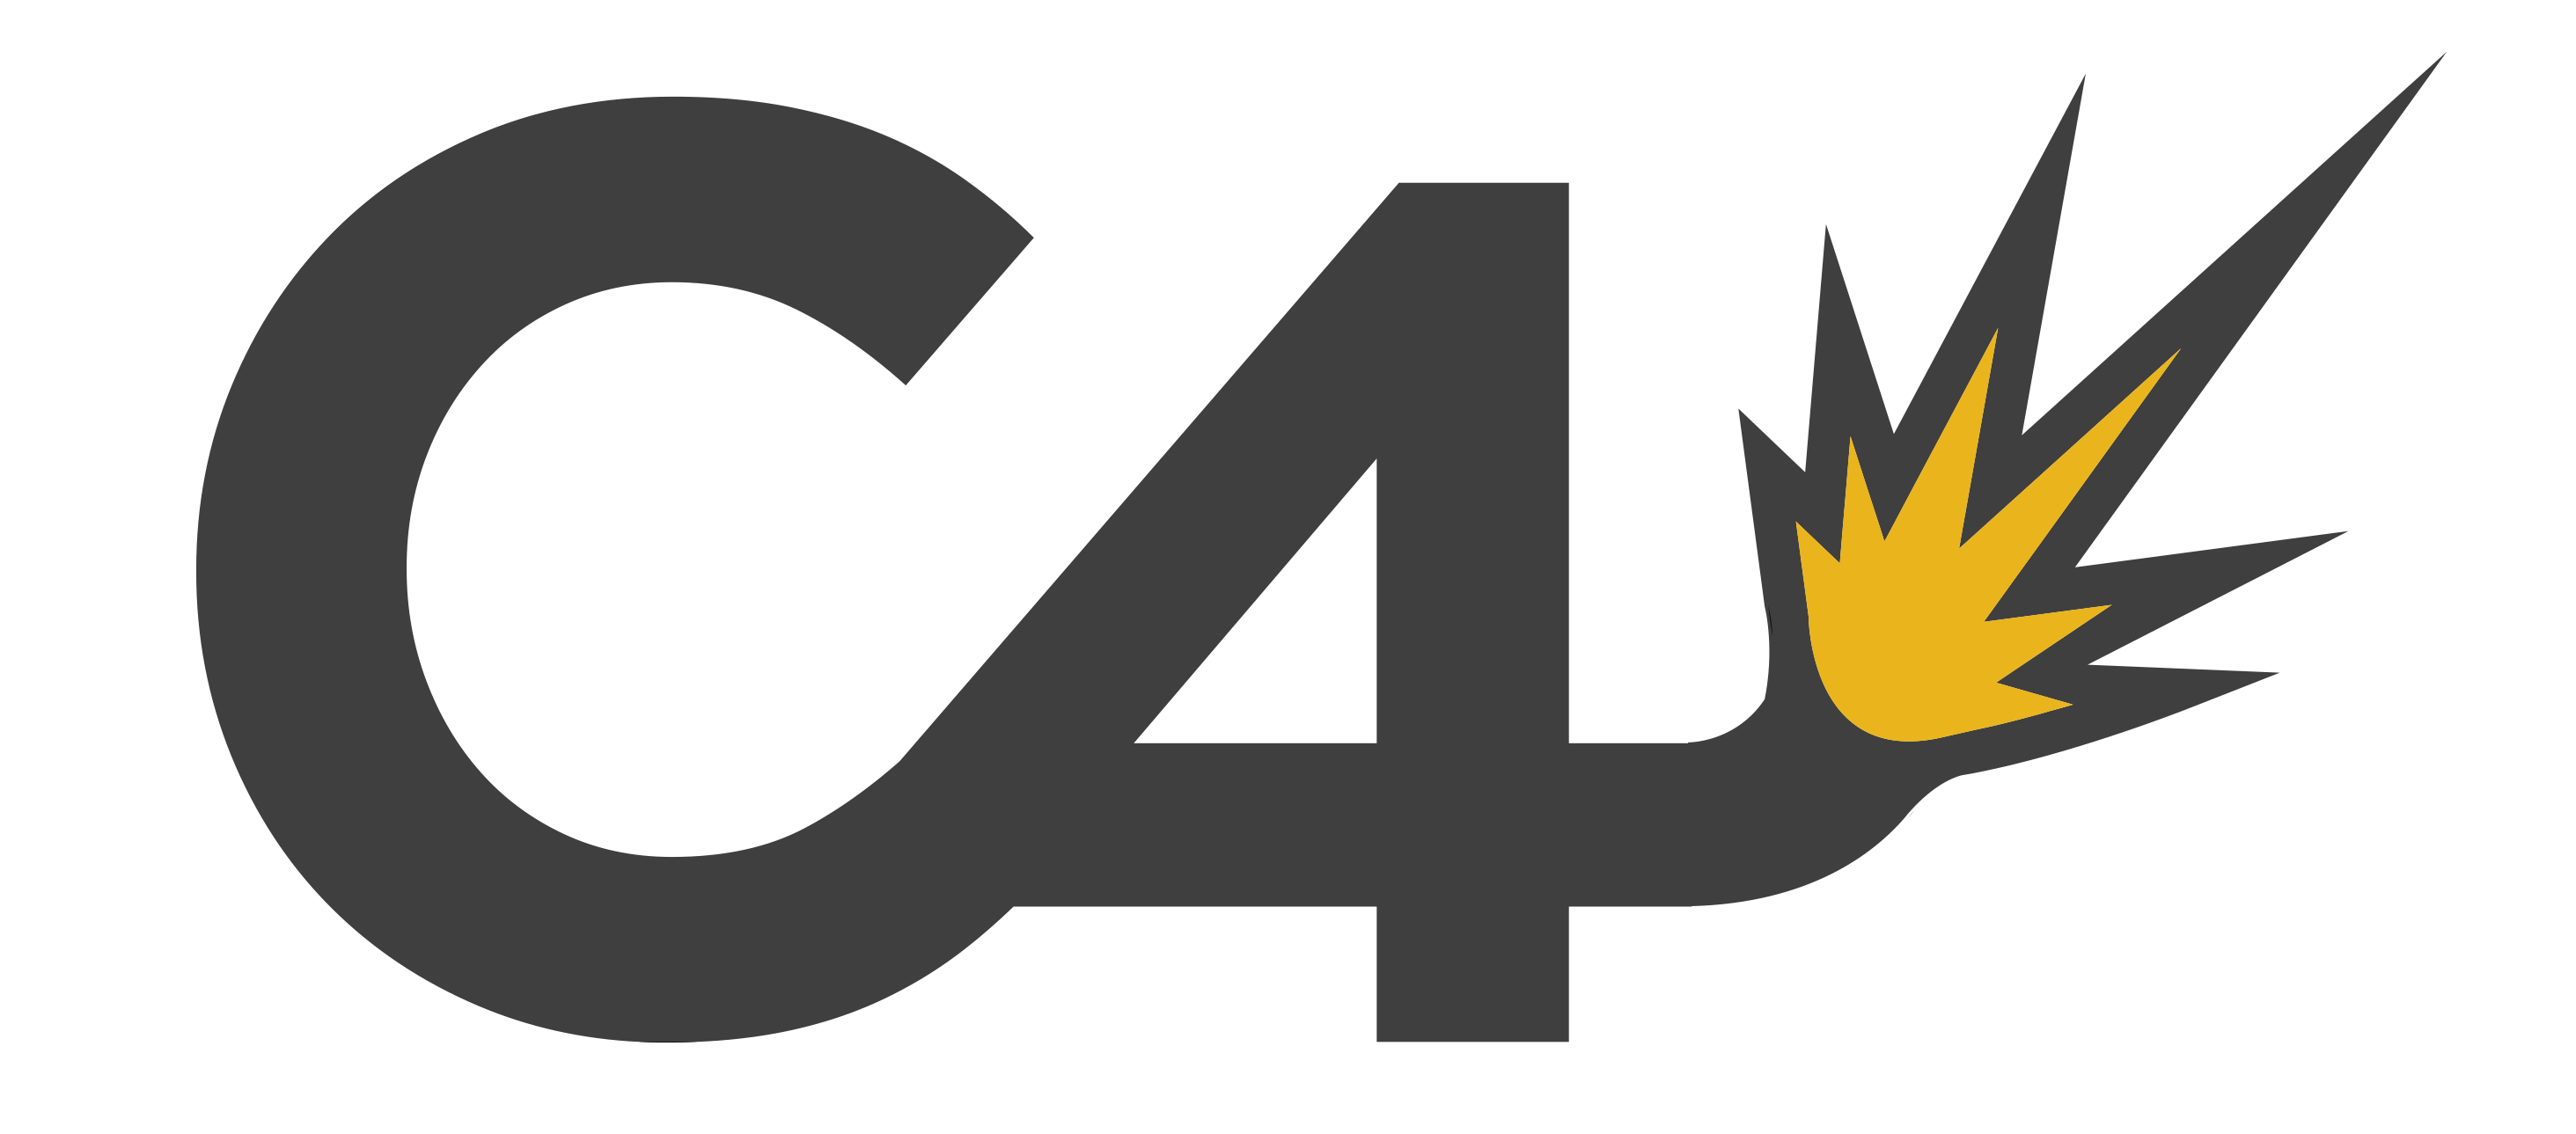 C4 Logo - C4 Productions & VFX – Explosive Marketing